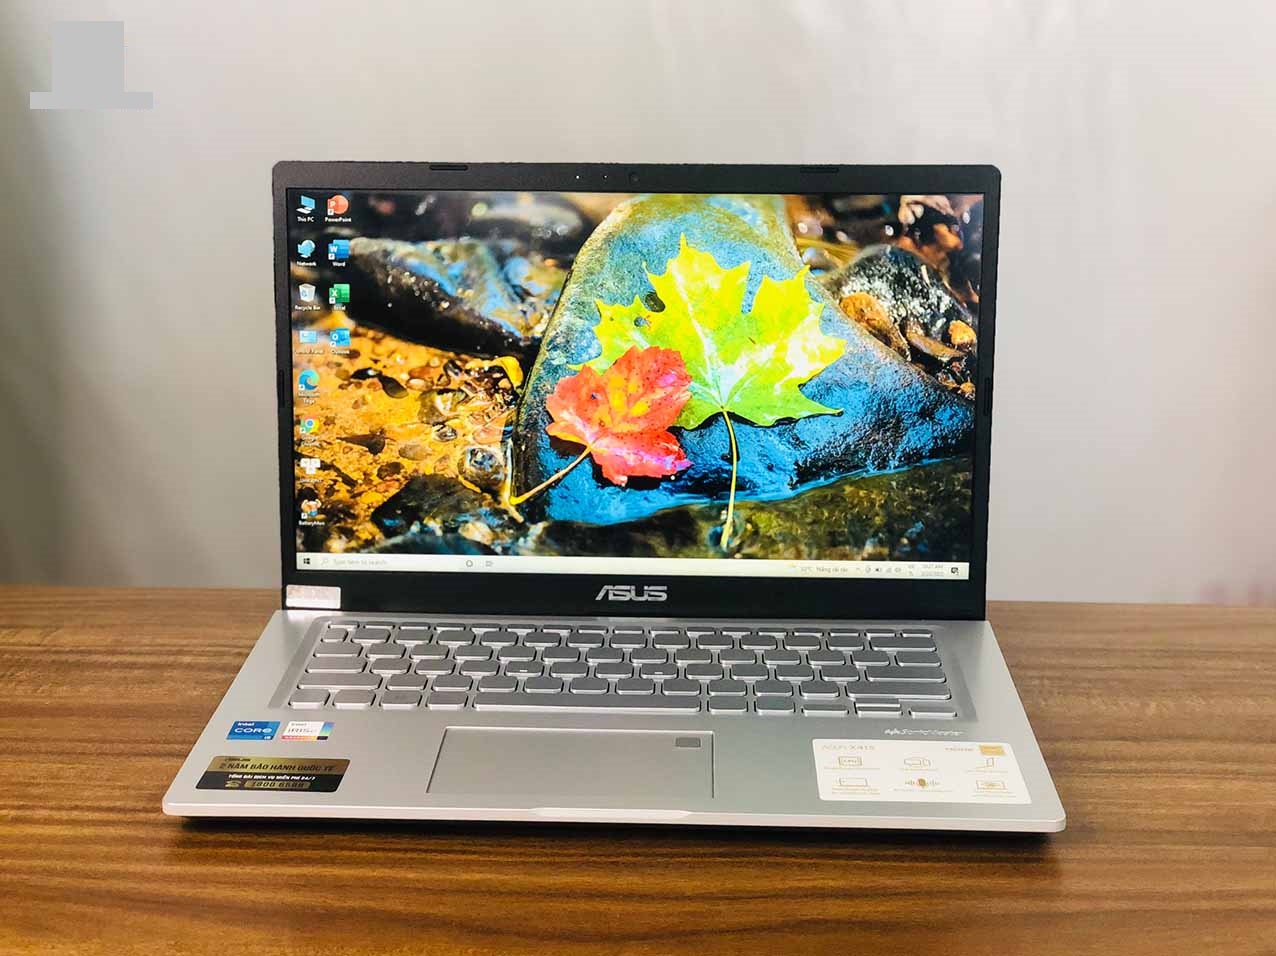 ASUS X415e Laptop Price in Pakistan